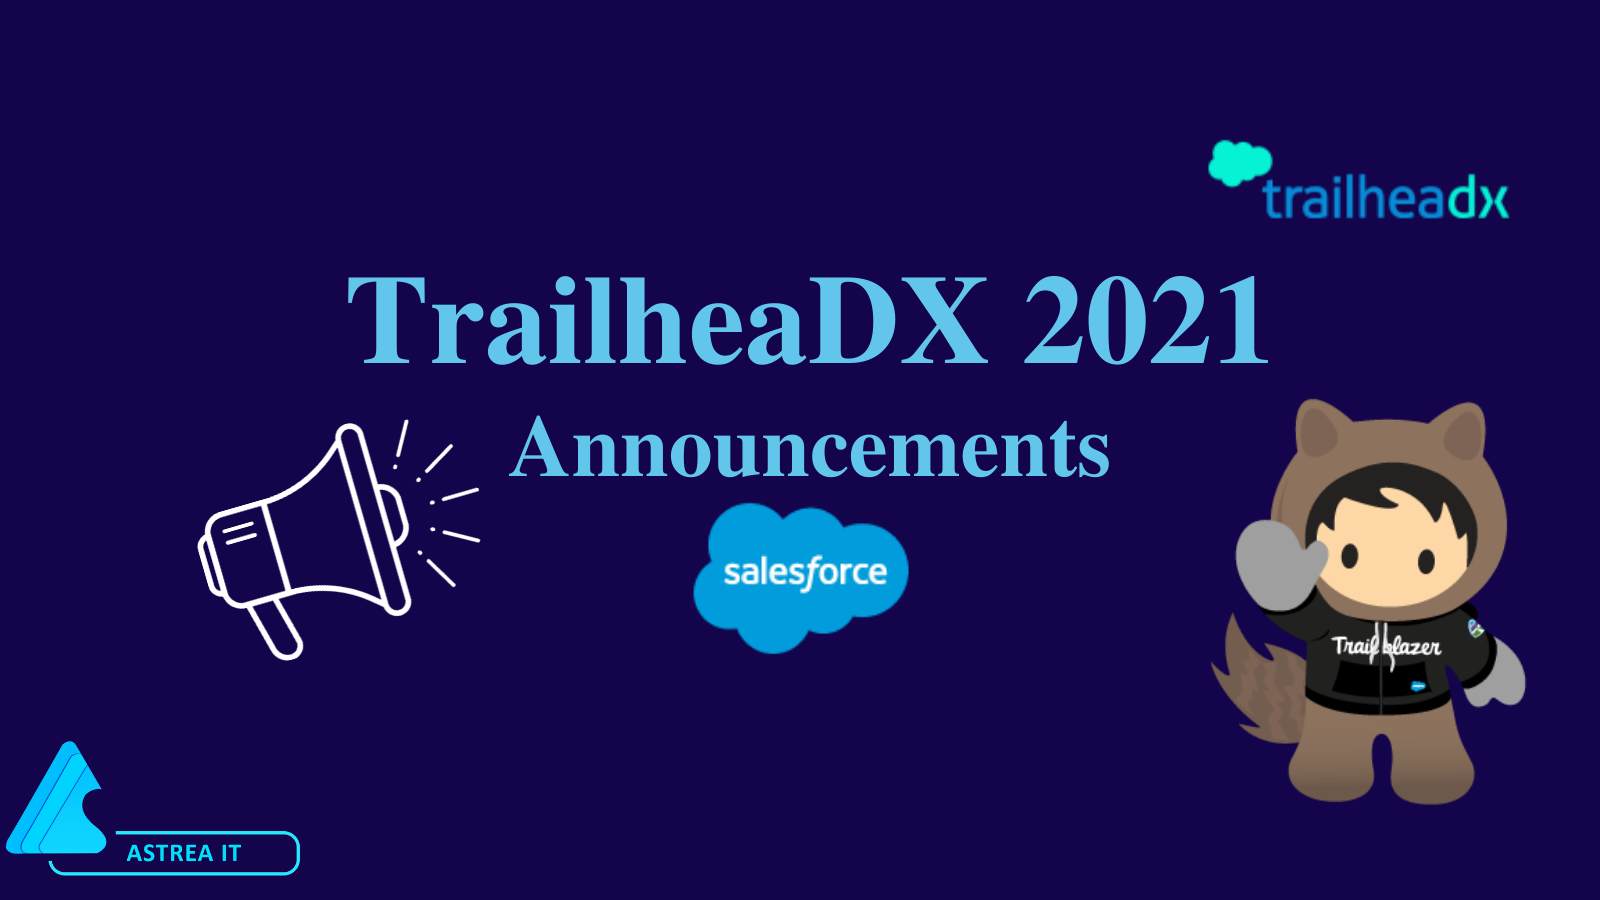 TrailheaDX 2021 Key Announcements